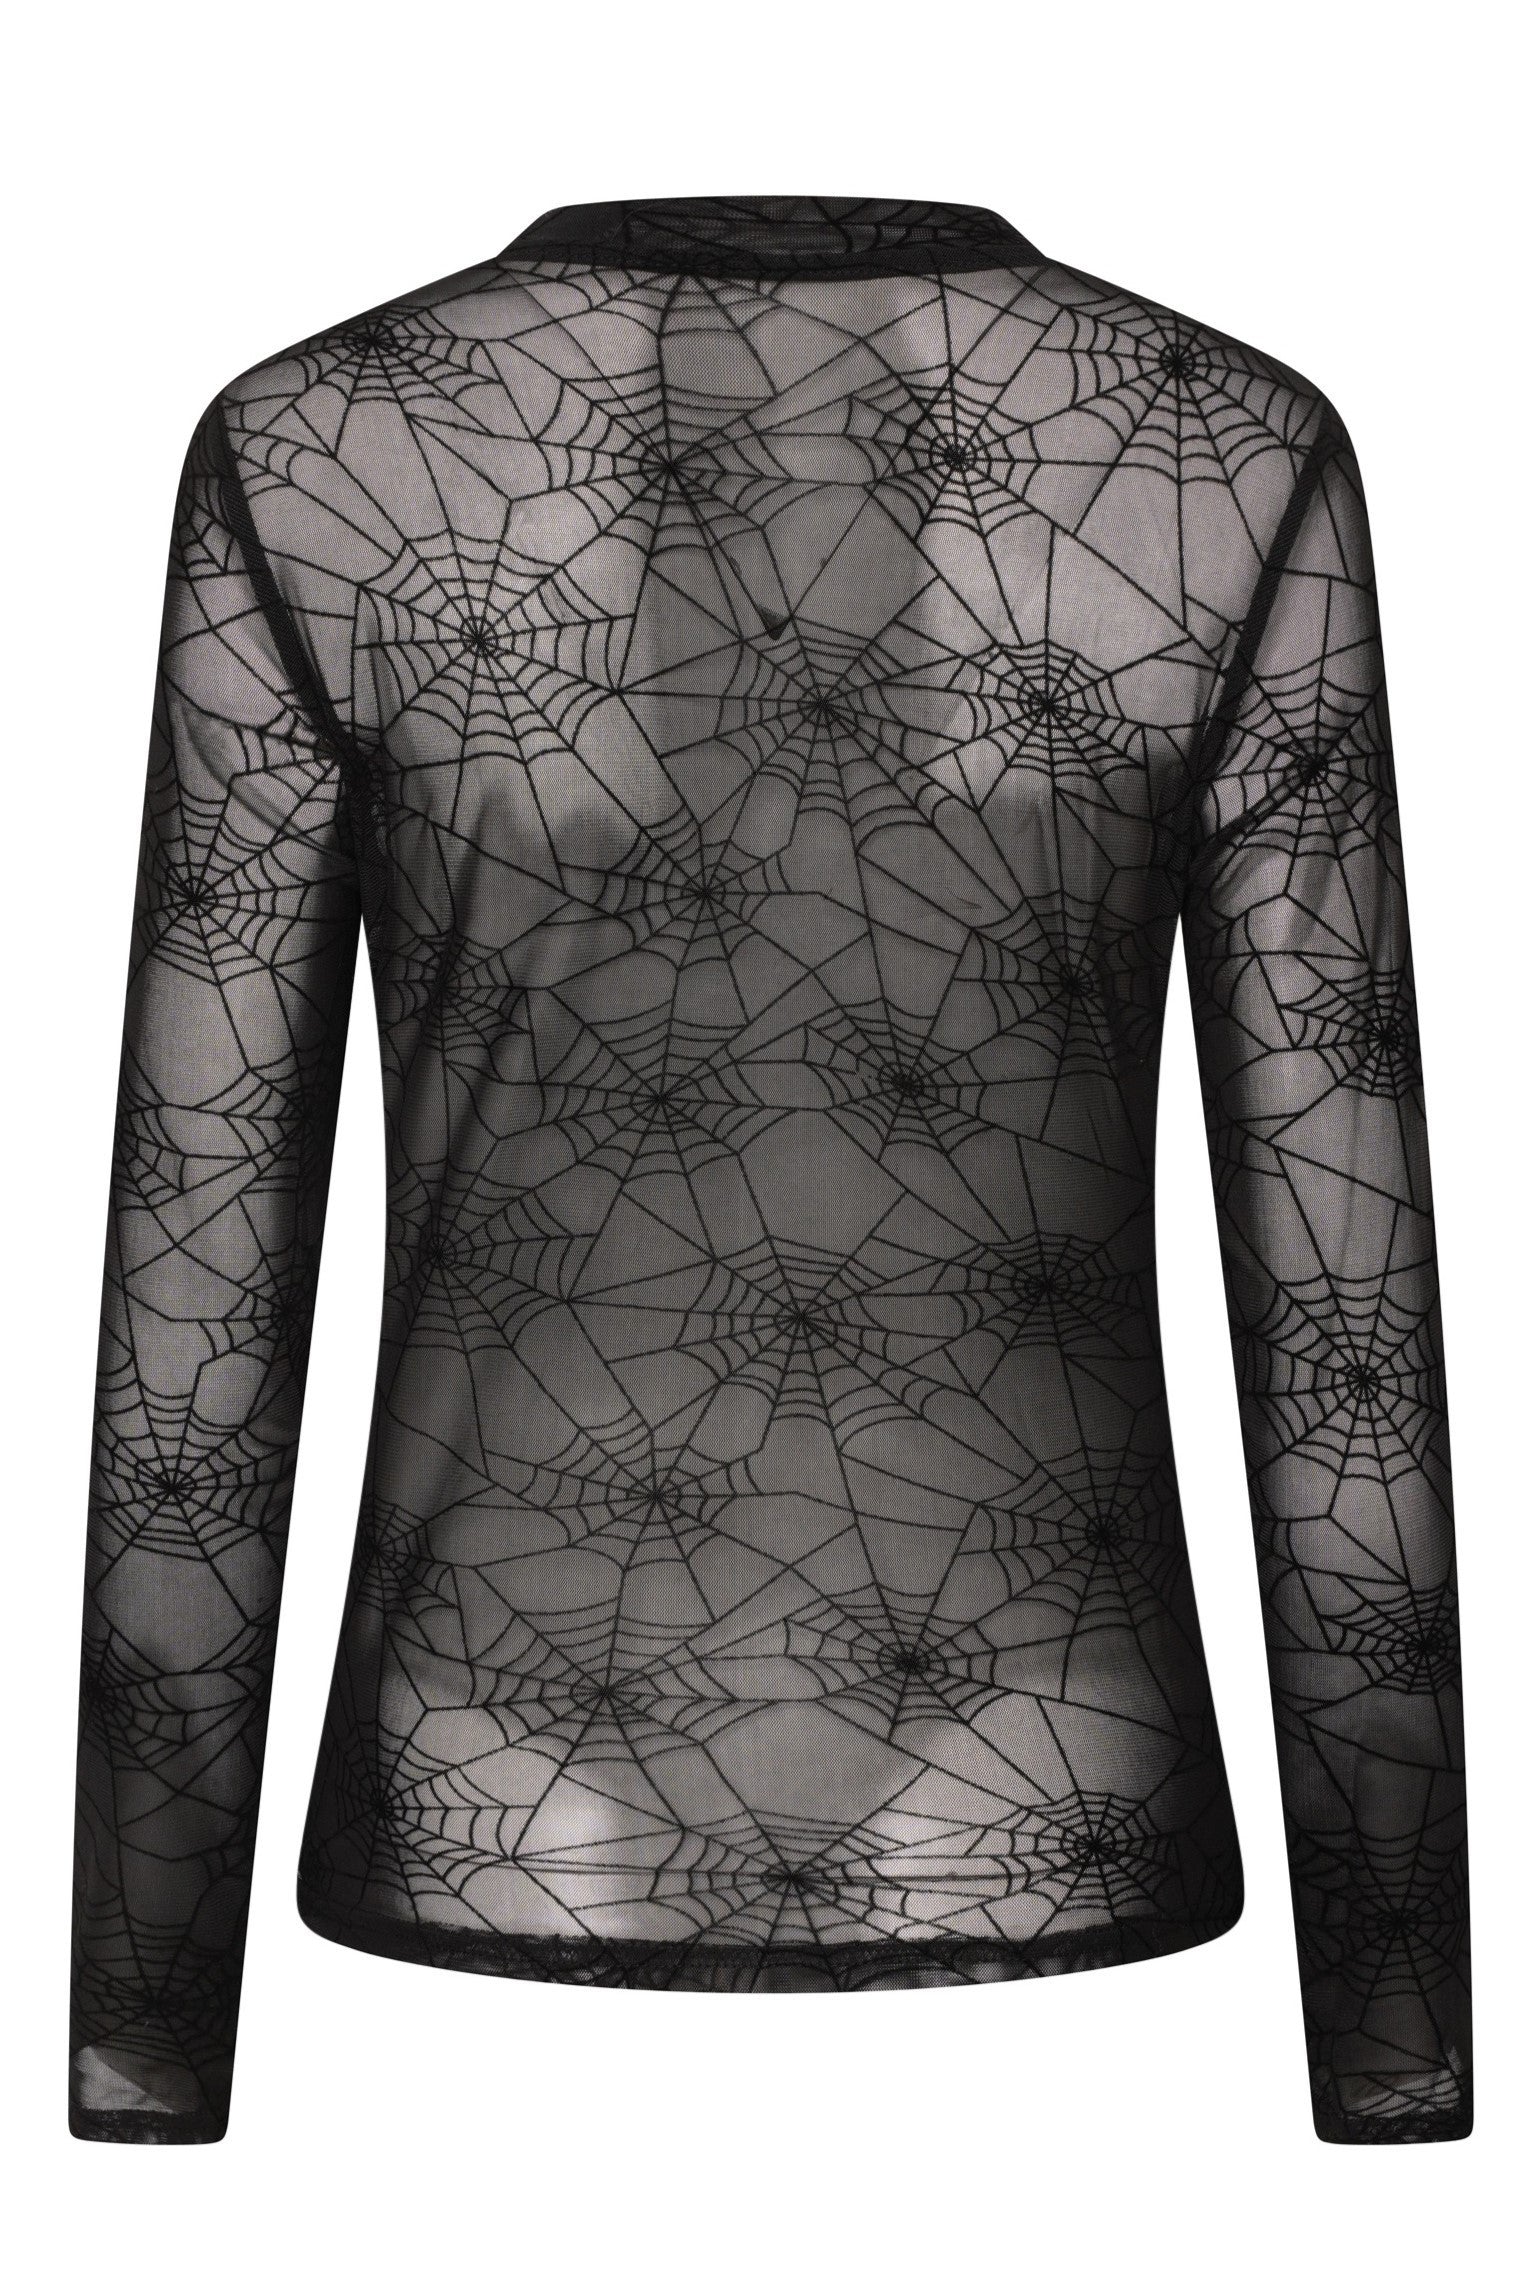 Ro Rox Sheer Spiderweb Knitted Velvet Flock Print Gothic Top